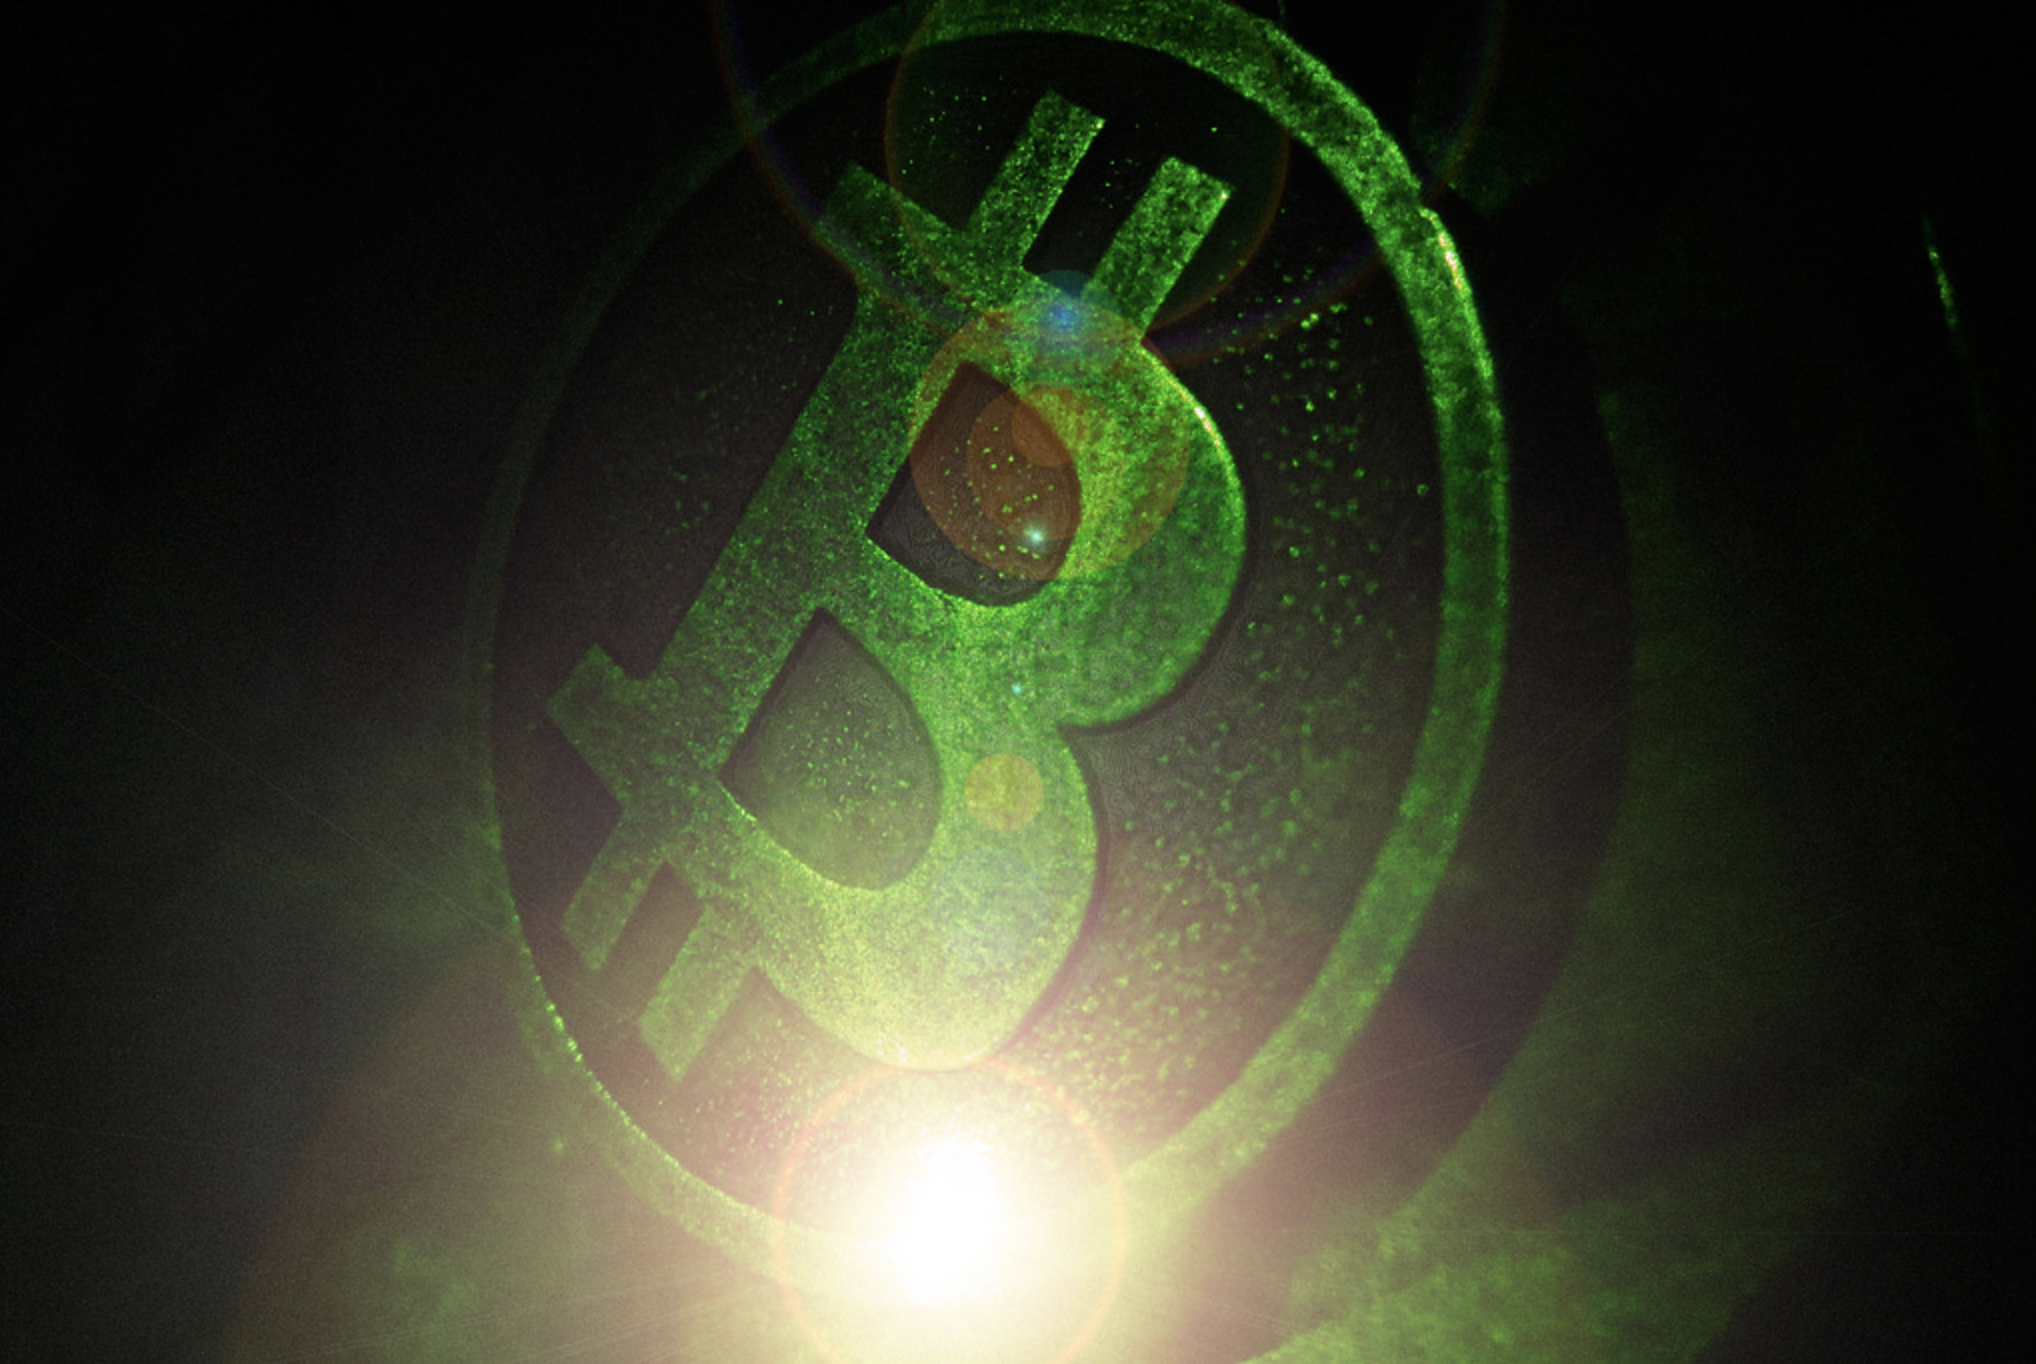 Green bitcoin. Bitcoin Green. Экология и криптовалюта. Логотип CRYPTOLOCKER. Фото биткоина зеленого цвета.